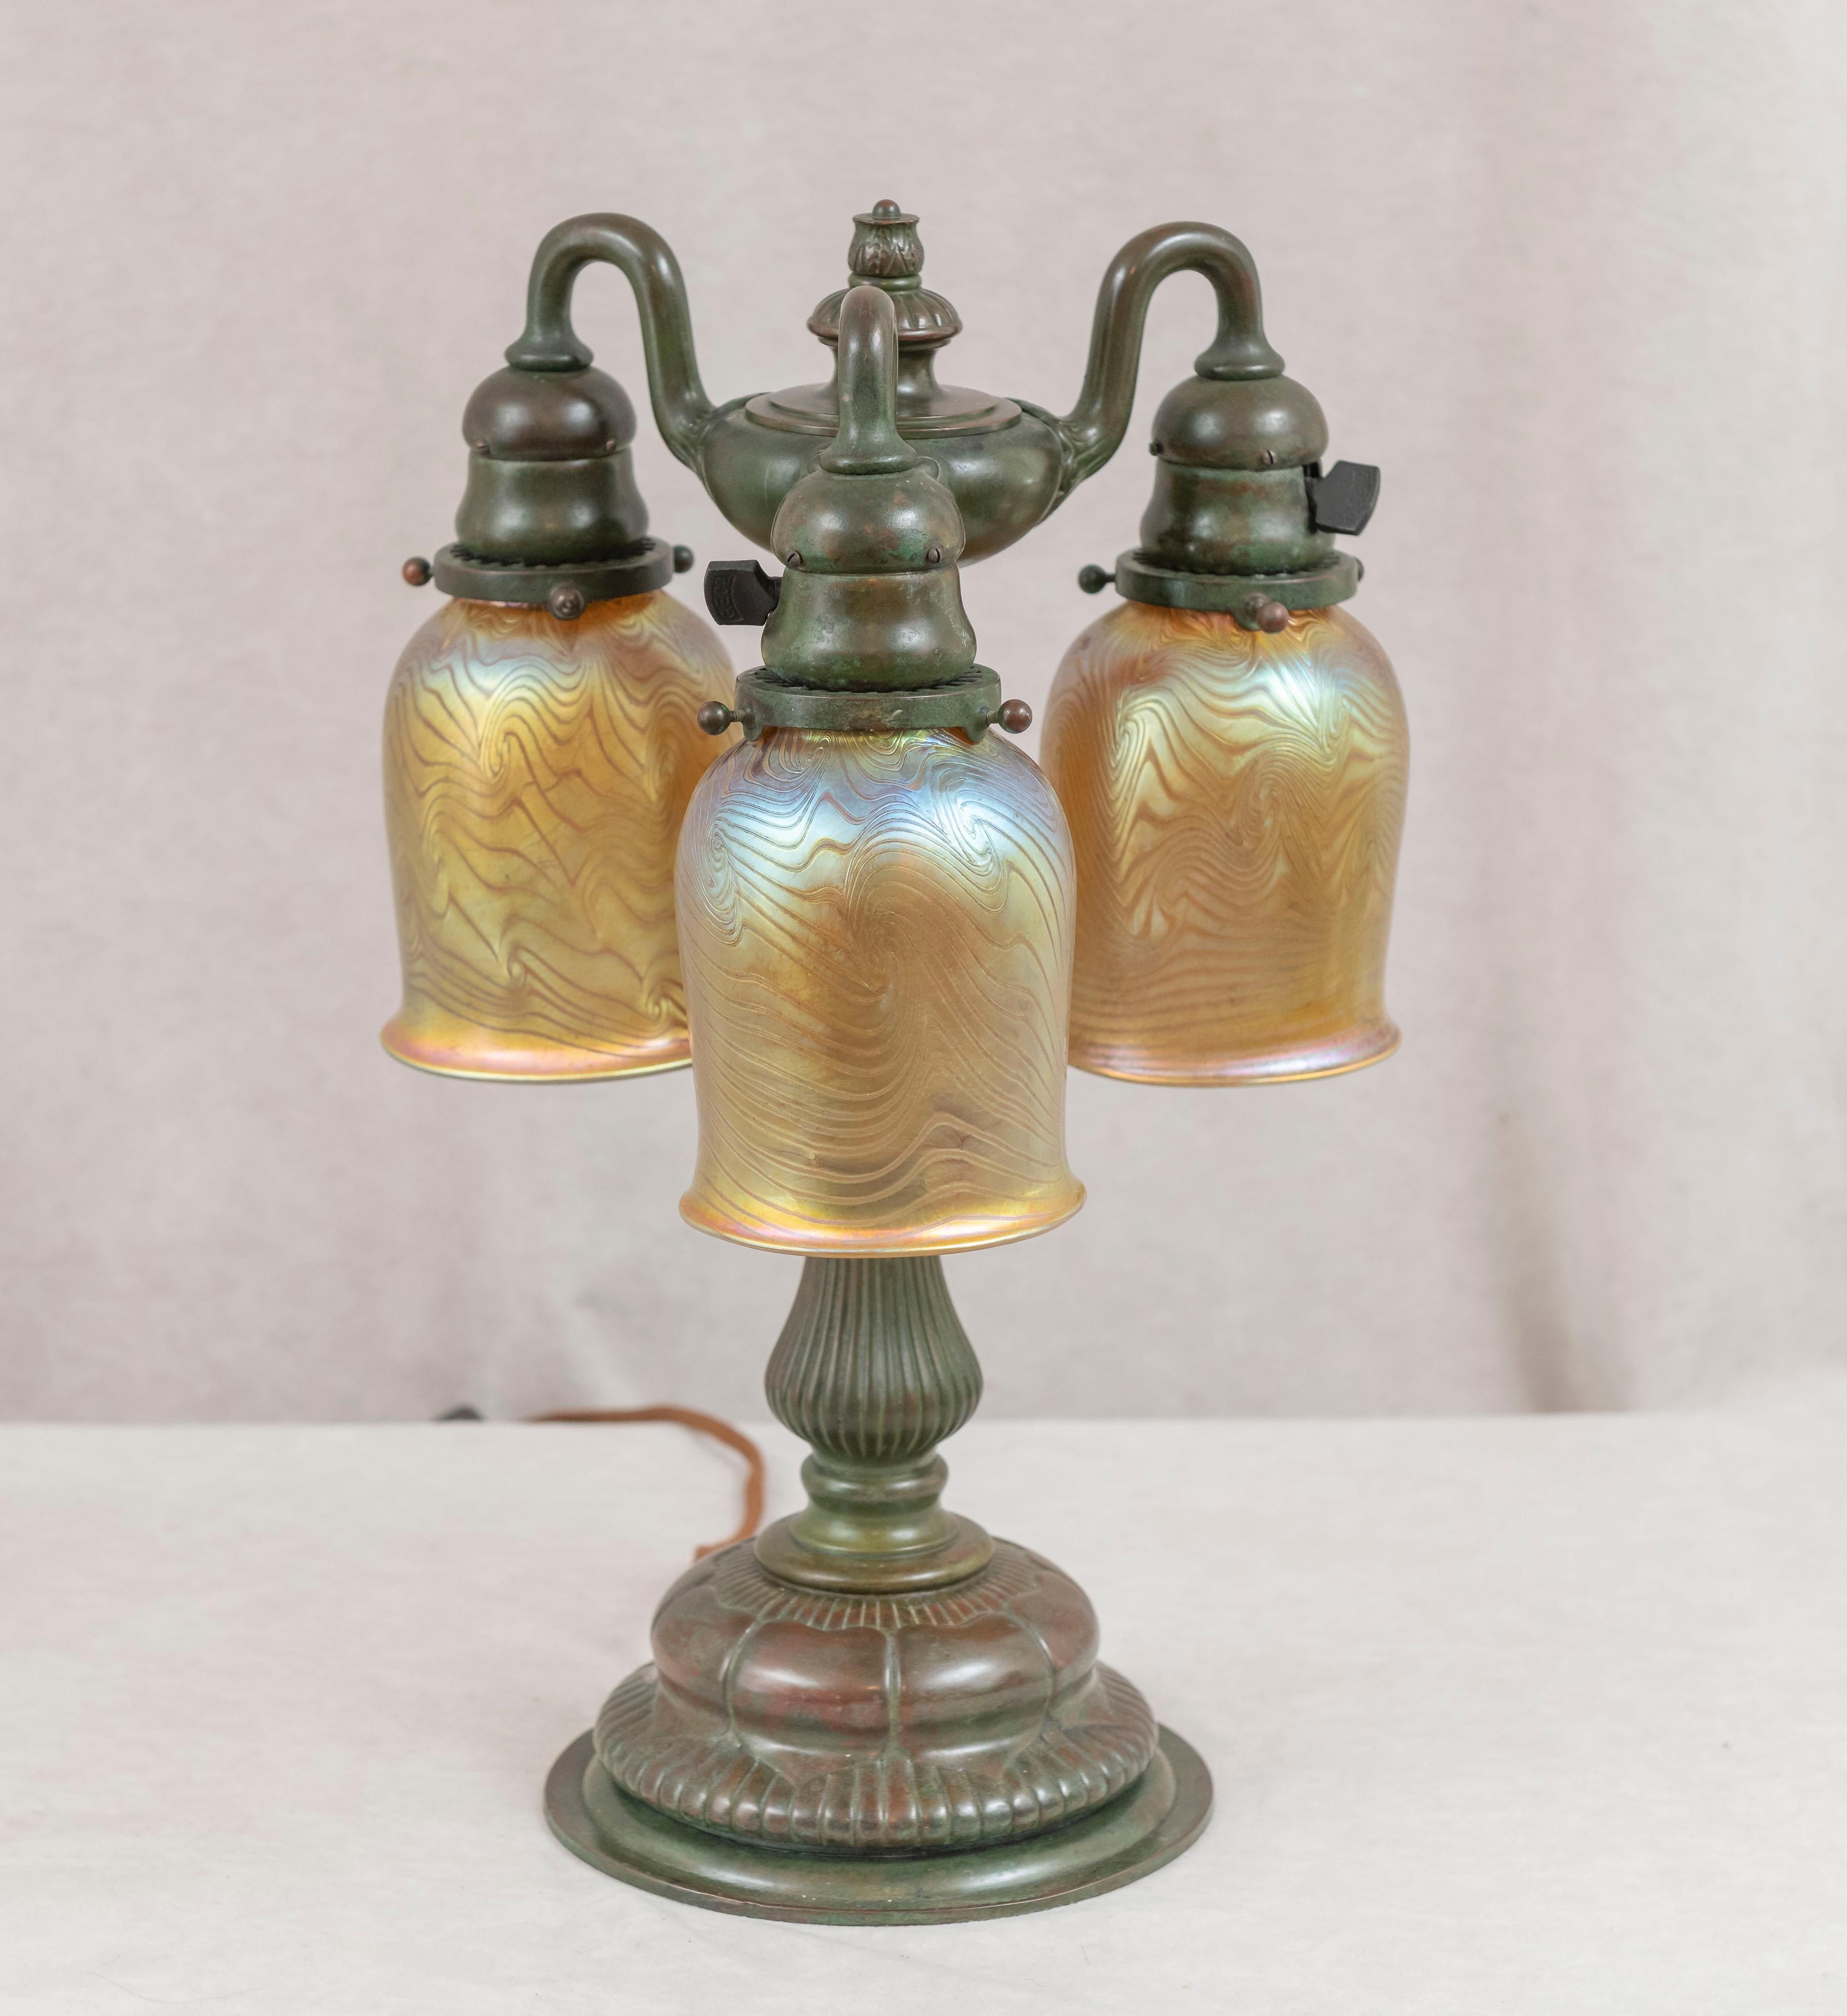 Art Nouveau Tiffany Studios 3 Arm Table Lamp with 3 Hand Blown Tiffany Shades, Circa1905